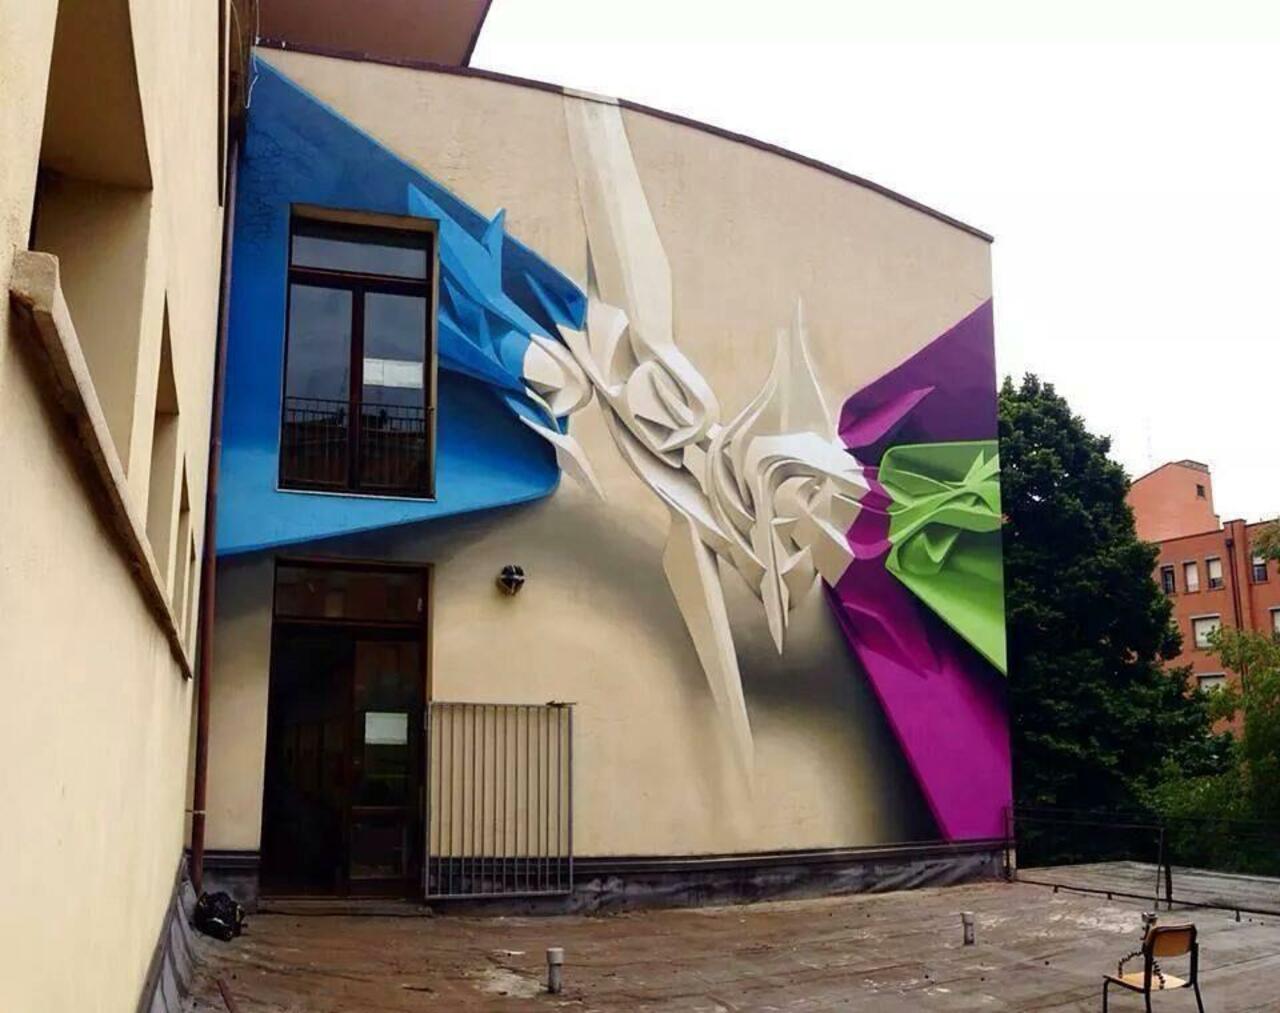 RT @designopinion: Artist @peeta3D amazing Street Art piece in Italy #art #mural #graffiti #streetart https://t.co/dXo311M5FY